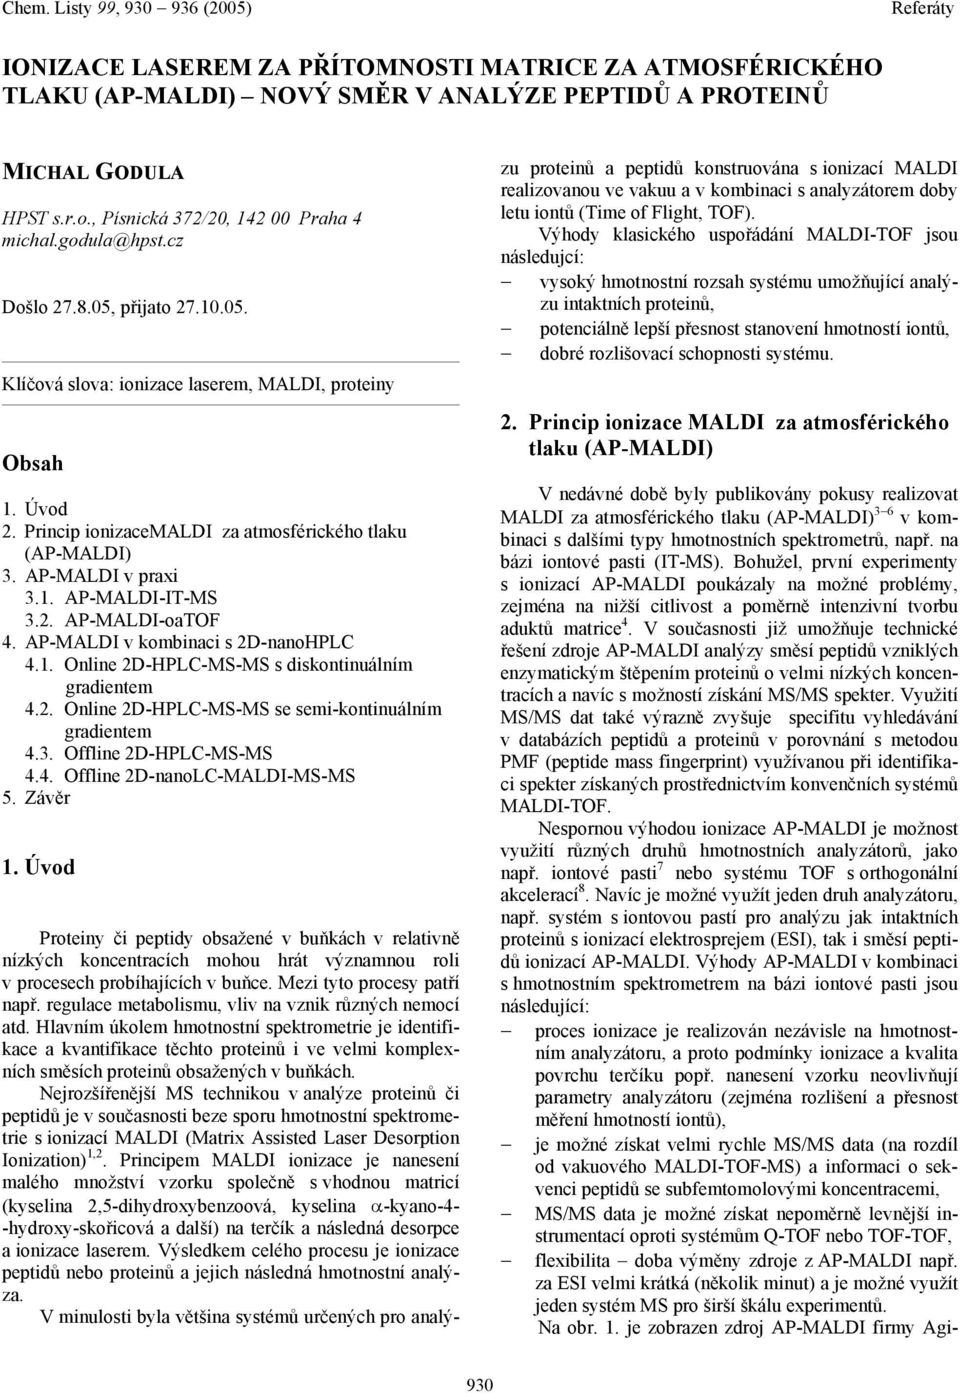 AP-MALDI v kombinci s 2D-nnoHPLC 4.1. Online 2D-HPLC-MS-MS s diskontinuálním grdientem 4.2. Online 2D-HPLC-MS-MS se semi-kontinuálním grdientem 4.3. Offline 2D-HPLC-MS-MS 4.4. Offline 2D-nnoLC-MALDI-MS-MS 5.